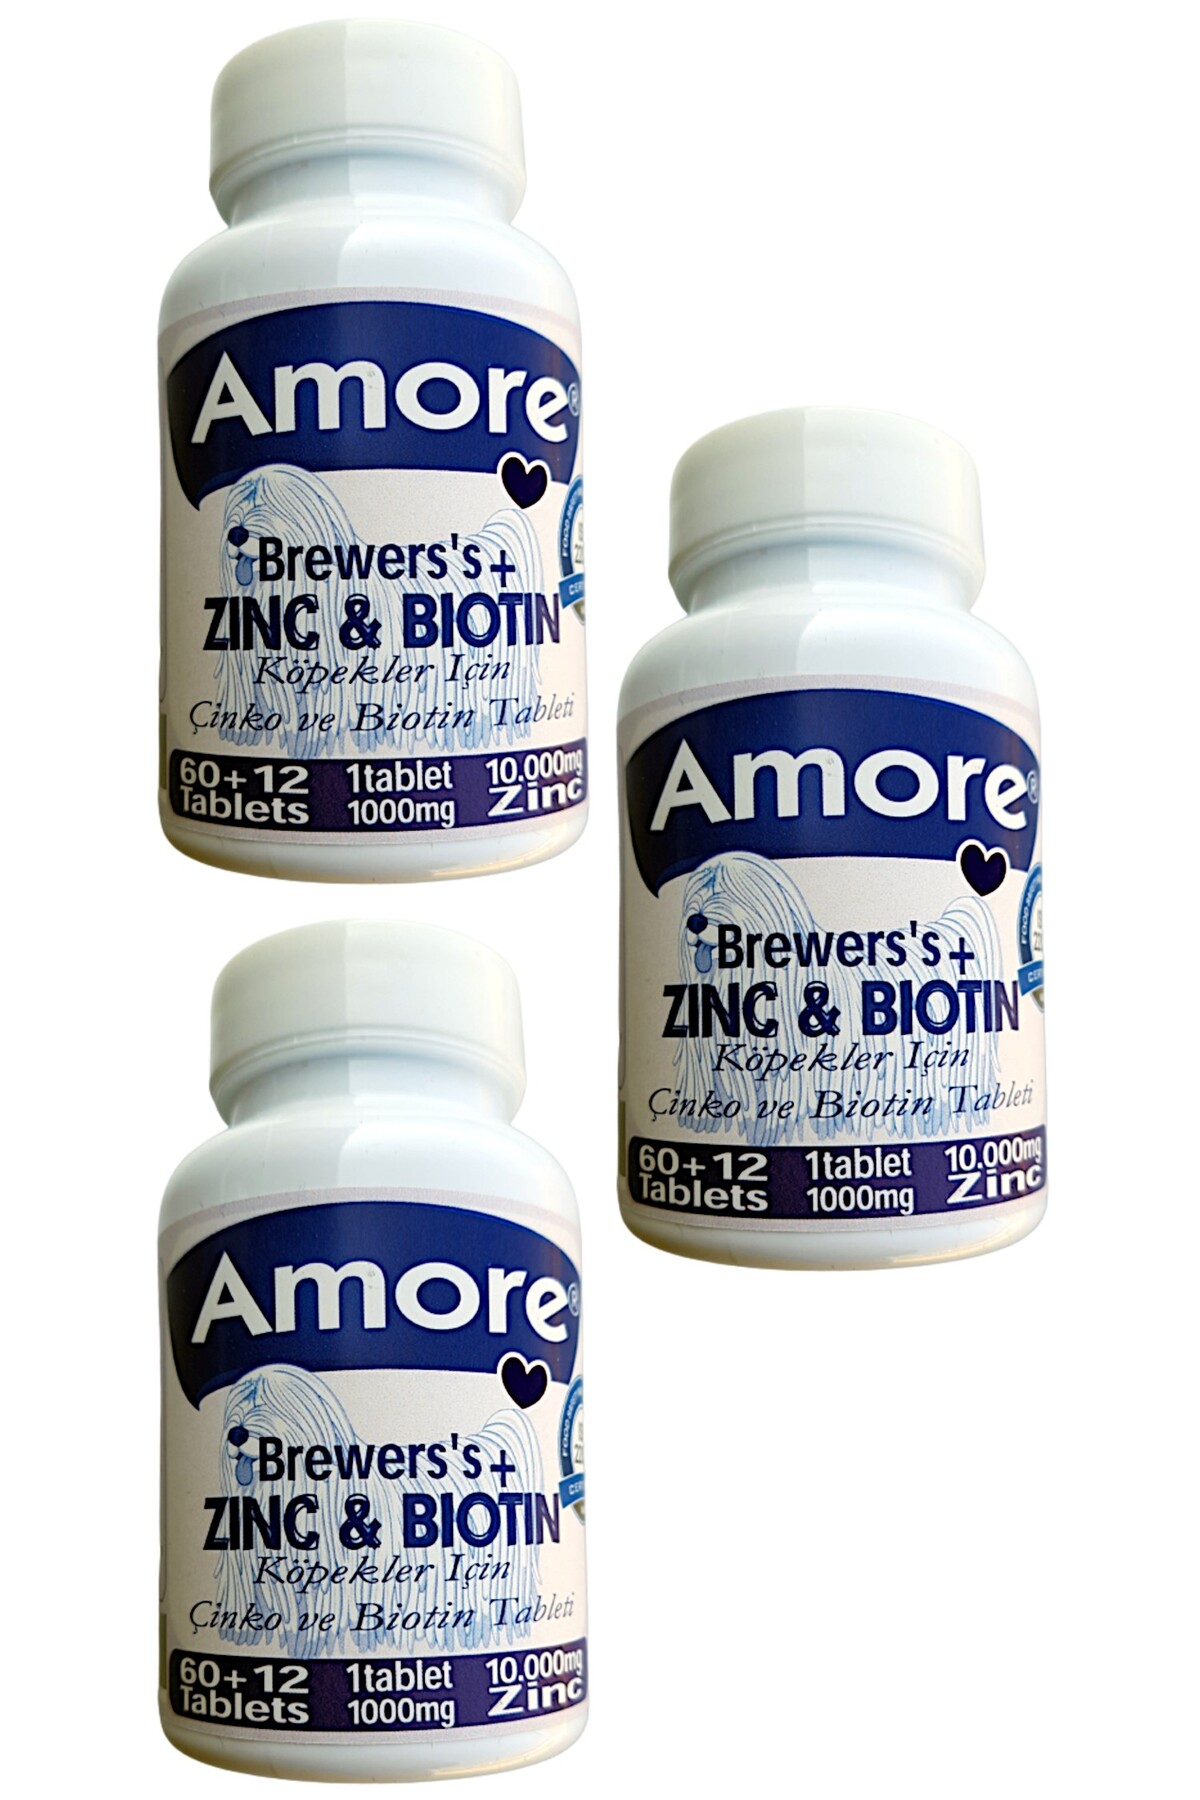 Amoredog Kopek Brewers 3 X 72li Cinko Biotin Tablet Tuy Dokum Xl Zinc Biotin Large Tabs